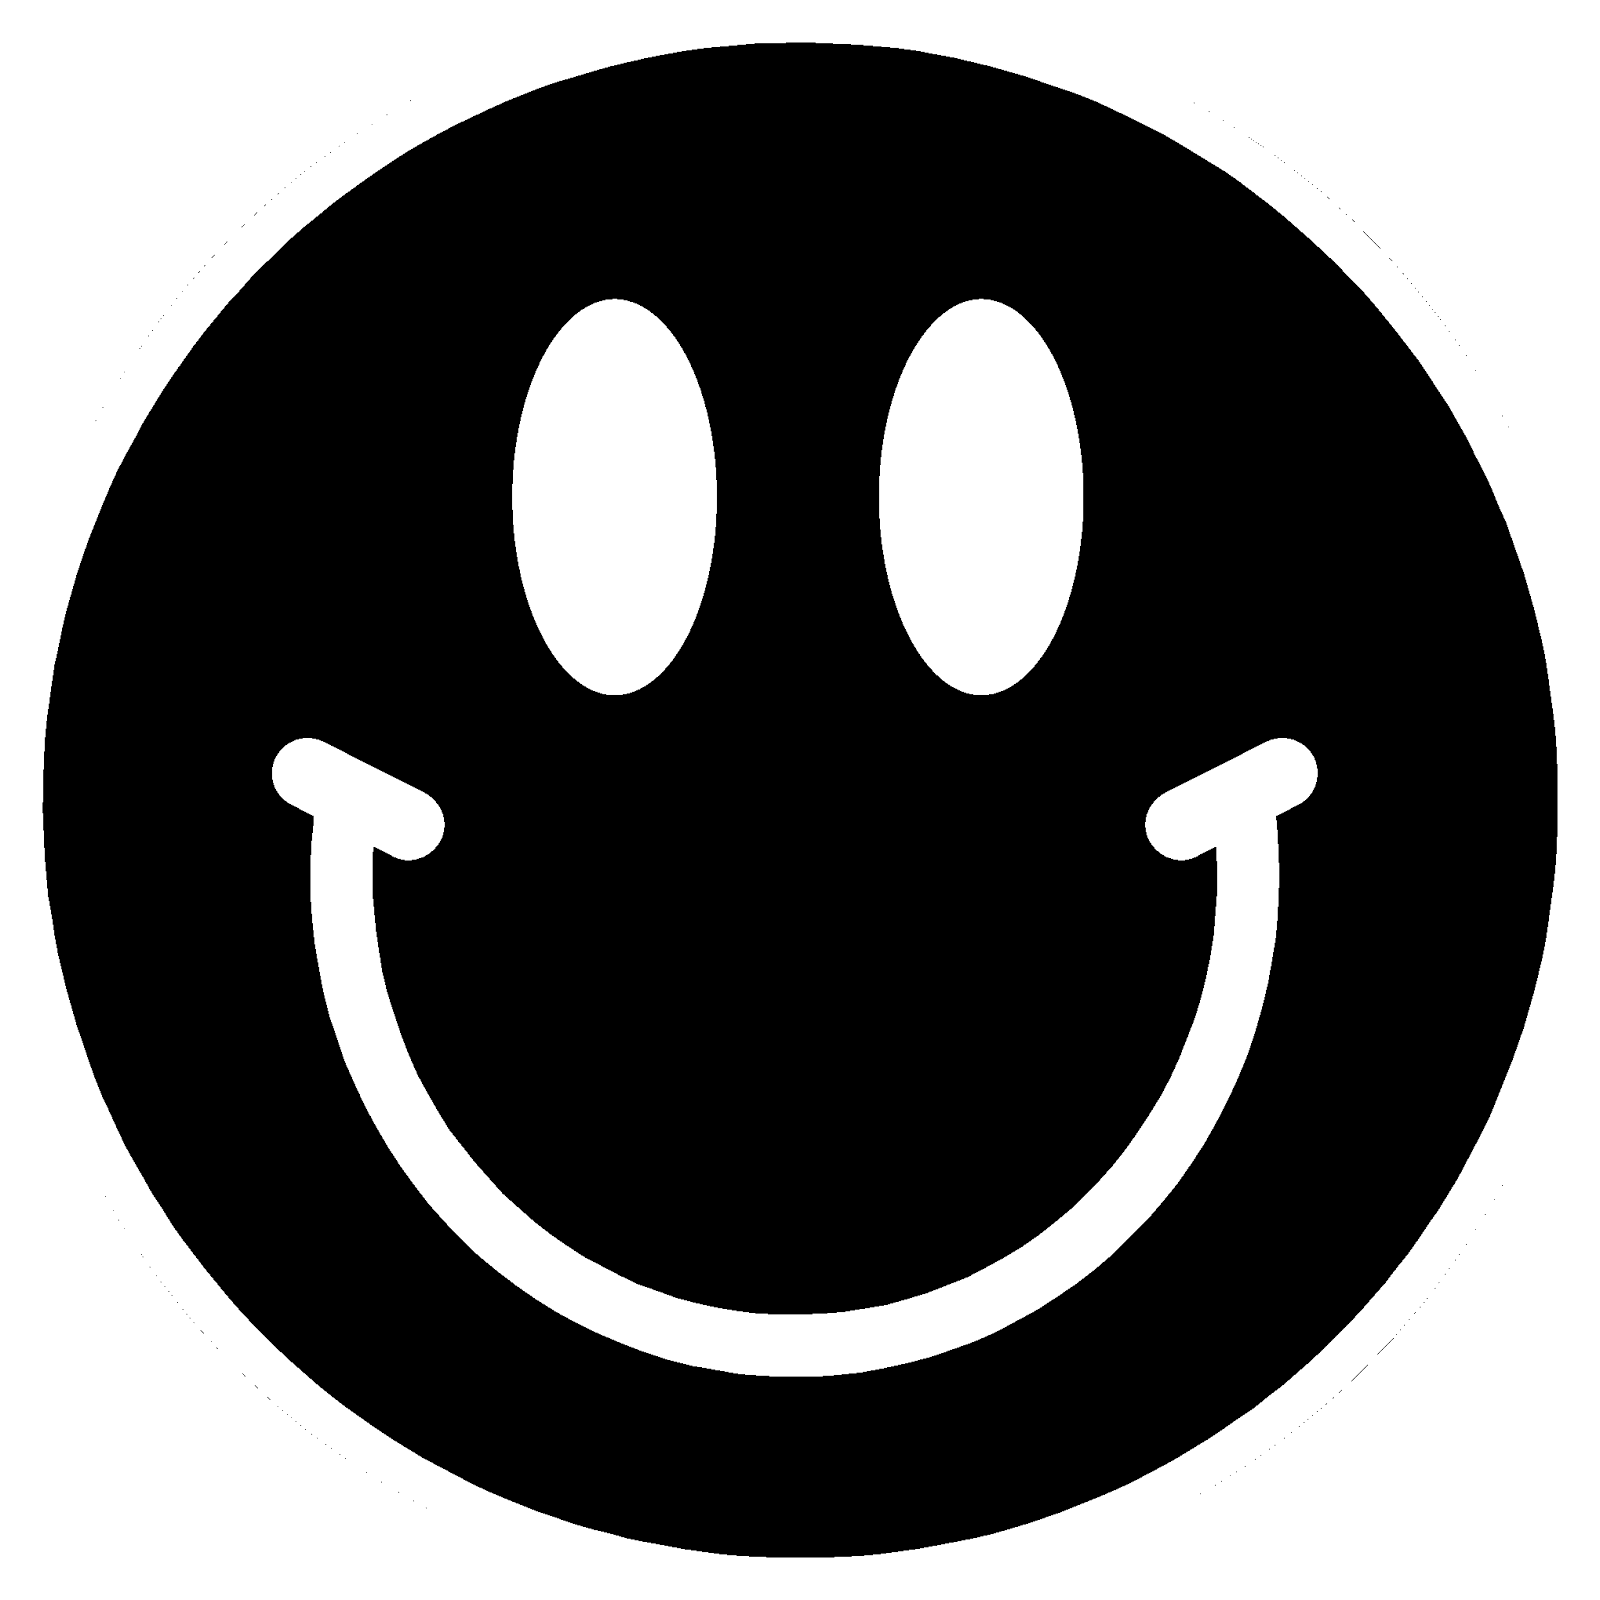 Black Smiley Face Symbol Emoji Coloring Pages Symbols Smiley | Images ...